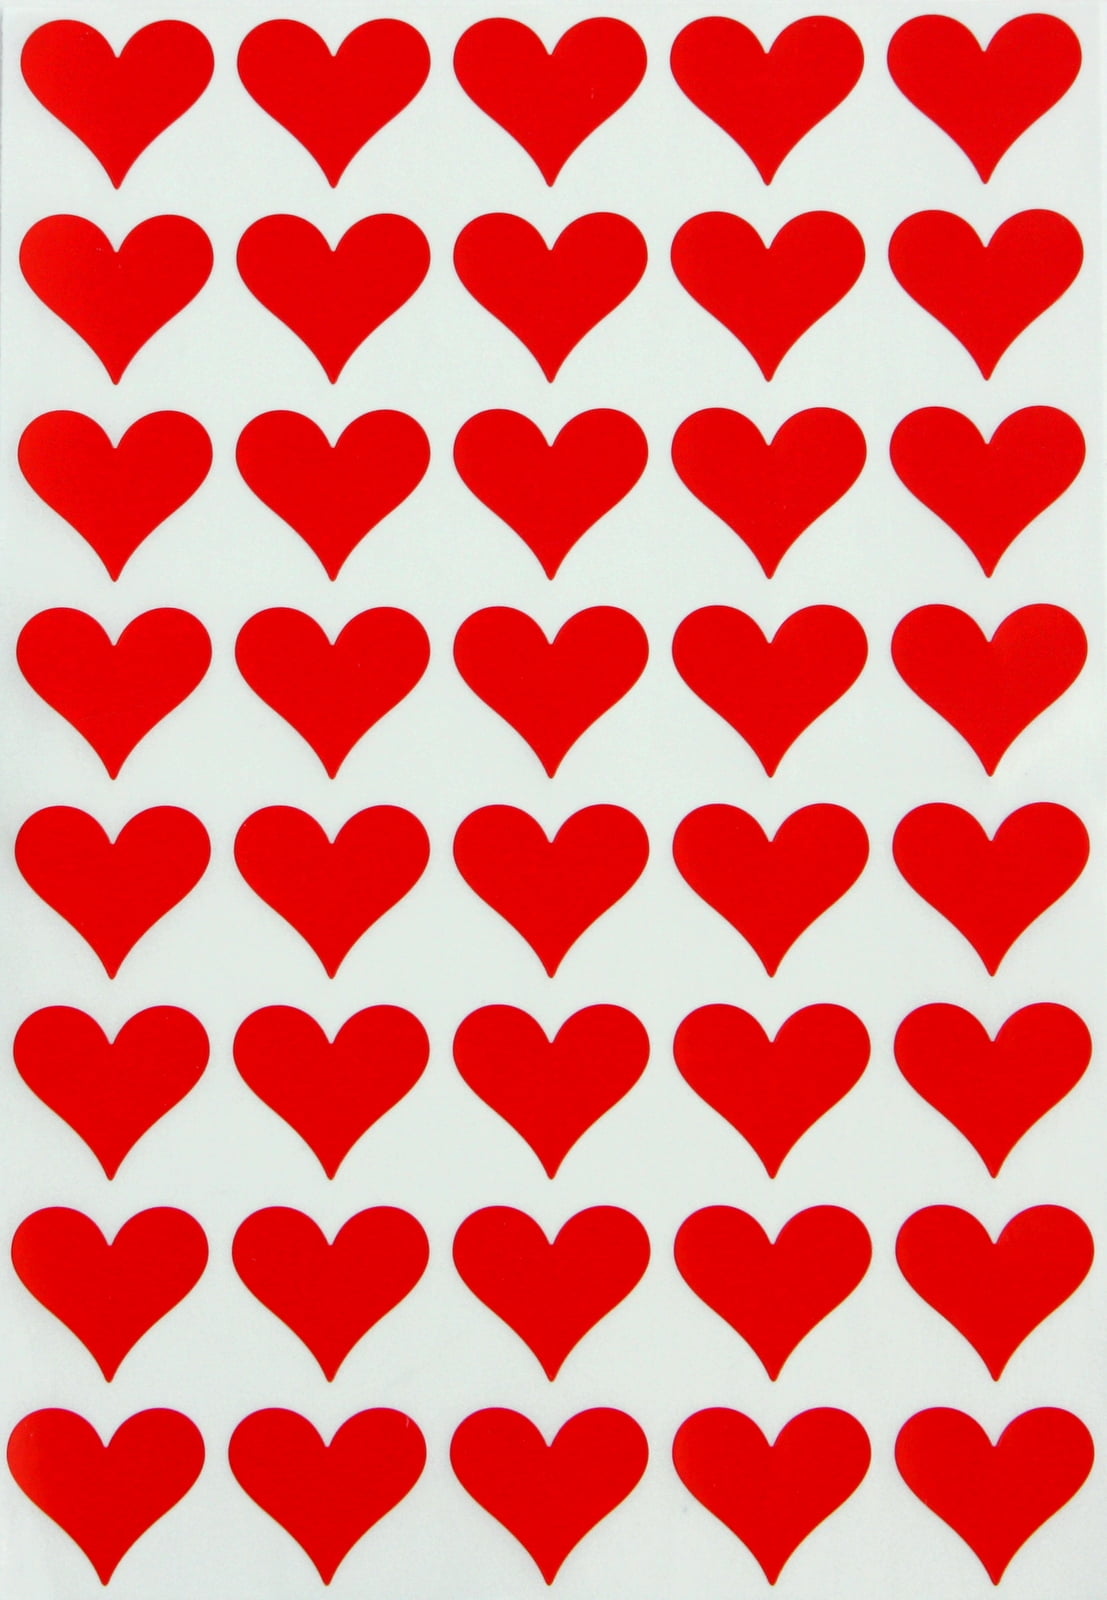 KALLORY 610pcs Love Stickers Valentines Day Heart Stickers Heart Shaped  Stickers Self Adhesive Foam Hearts Wedding Decorations Mini Heart Stickers